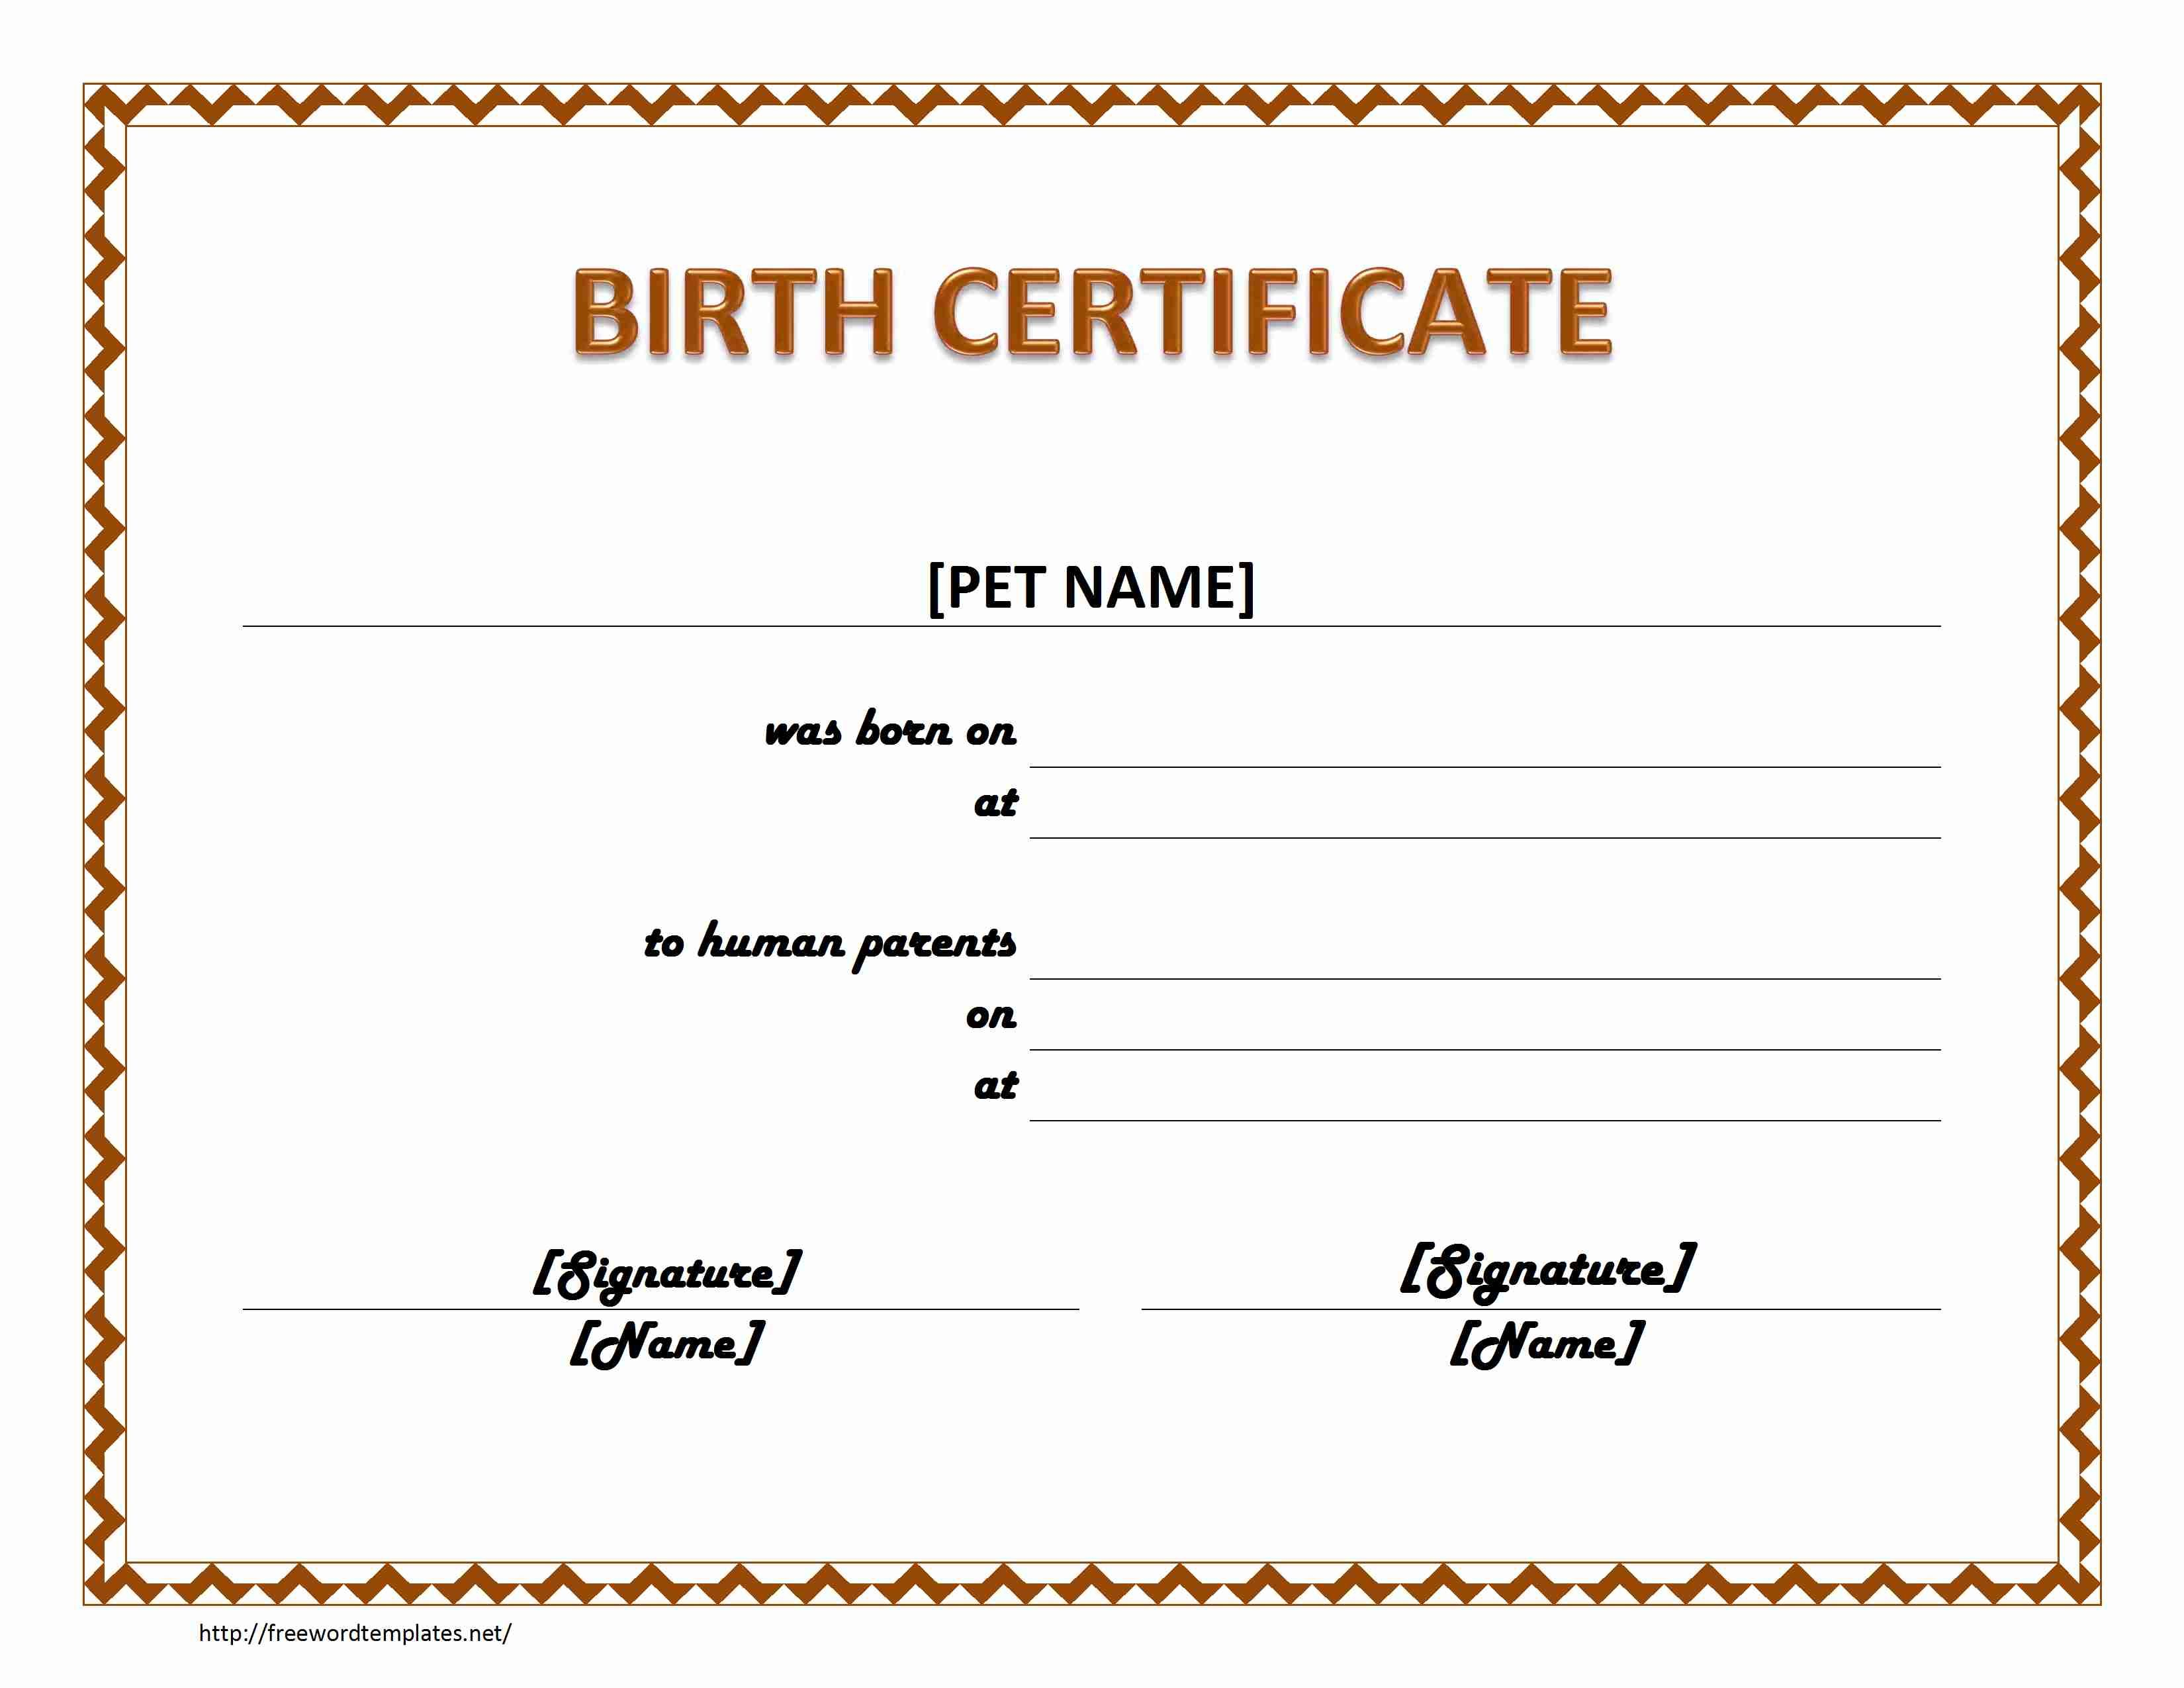 Pet Birth Certificate Maker | Pet Birth Certificate For Word With Birth Certificate Fake Template